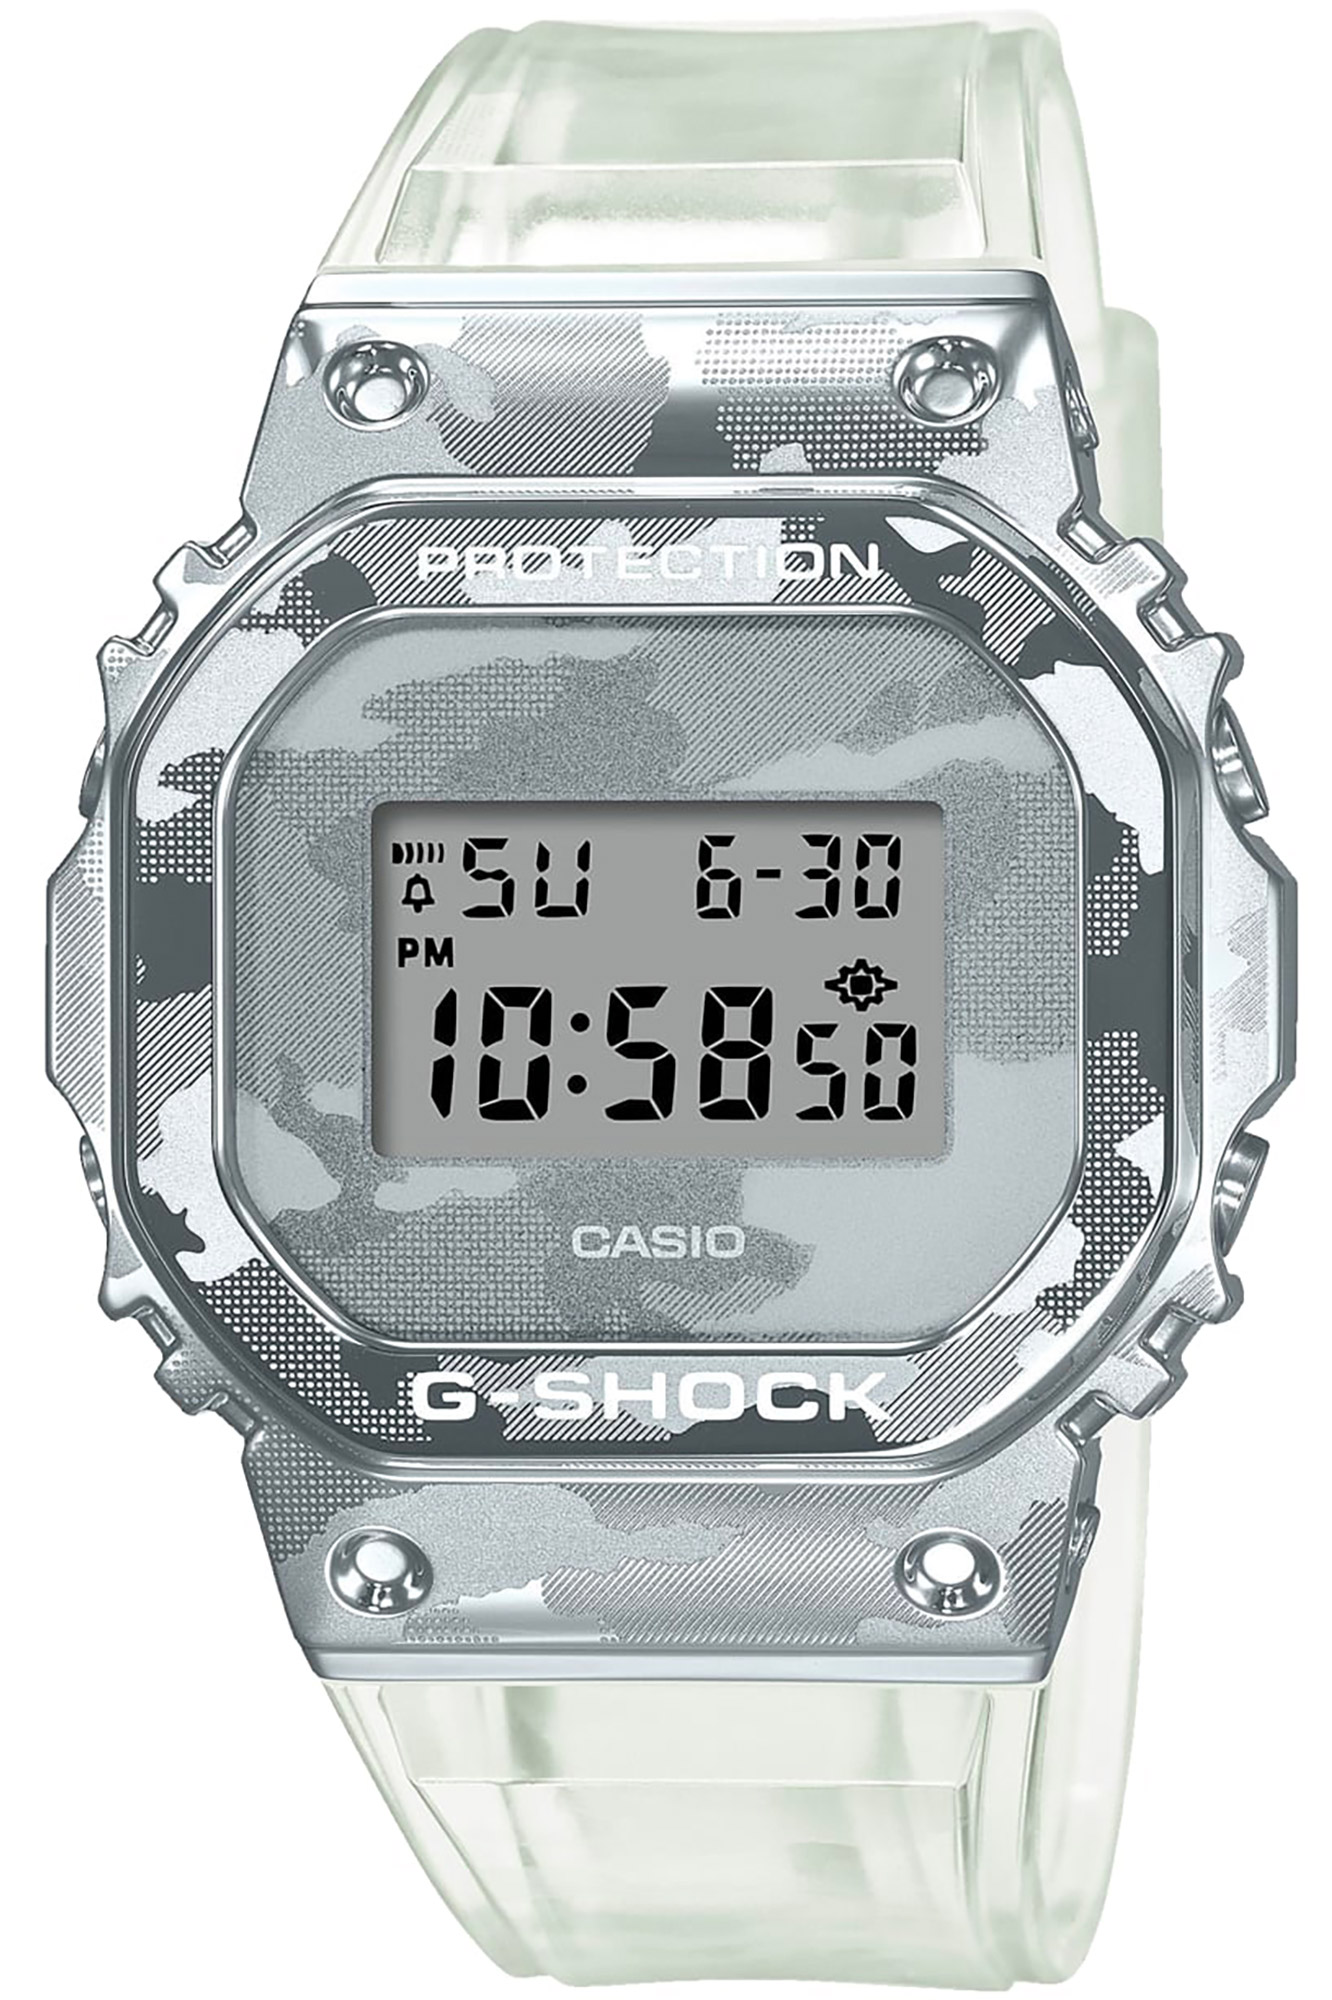 Watch CASIO G-Shock gm-5600scm-1er